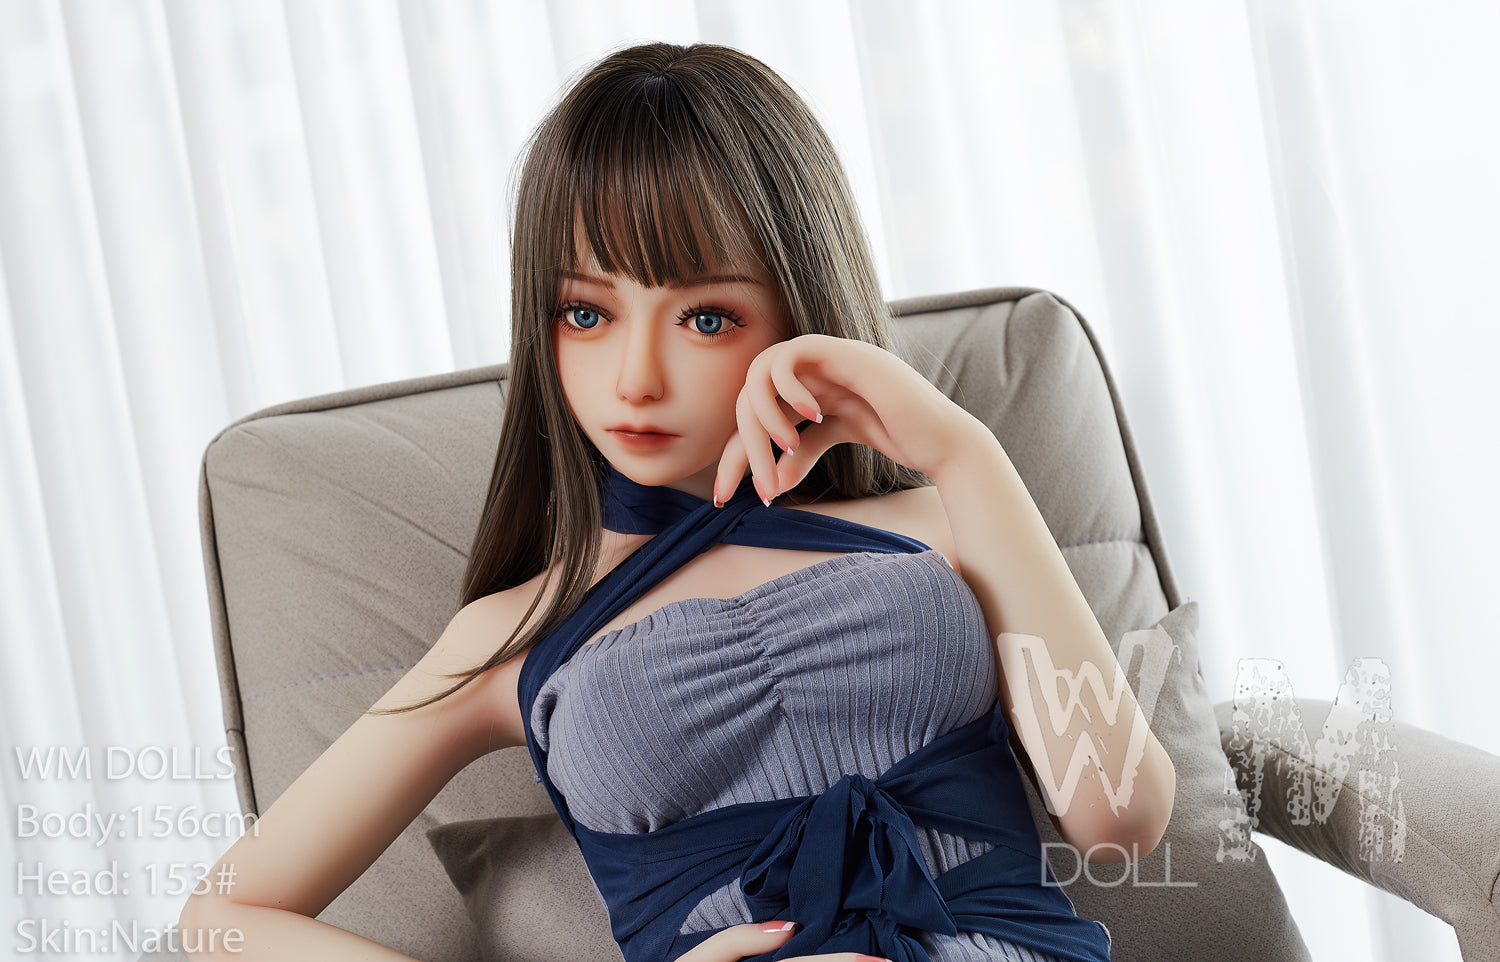 WM Doll 156 cm C TPE - Melody | Buy Sex Dolls at DOLLS ACTUALLY